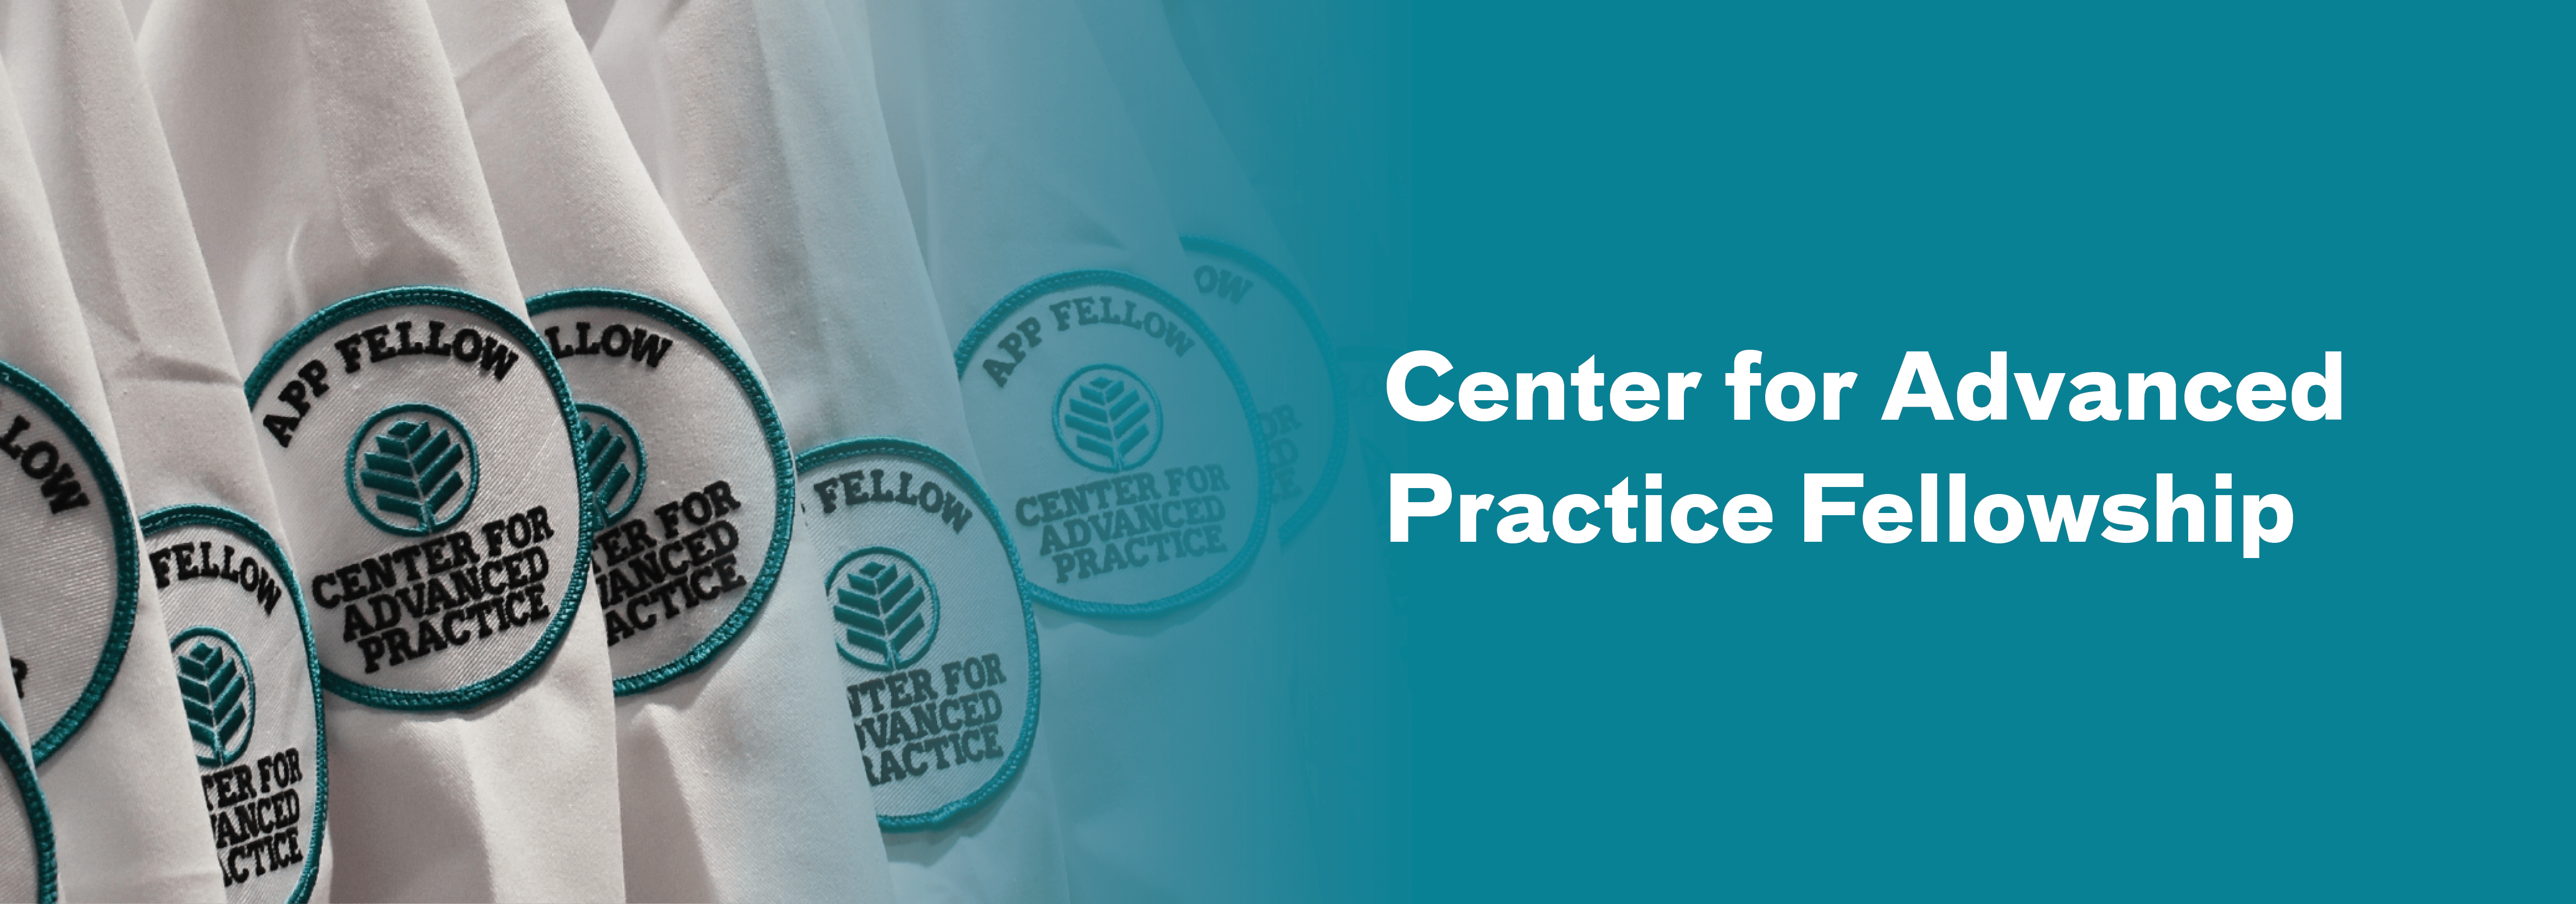 Center for Advanced Practice Fellowship